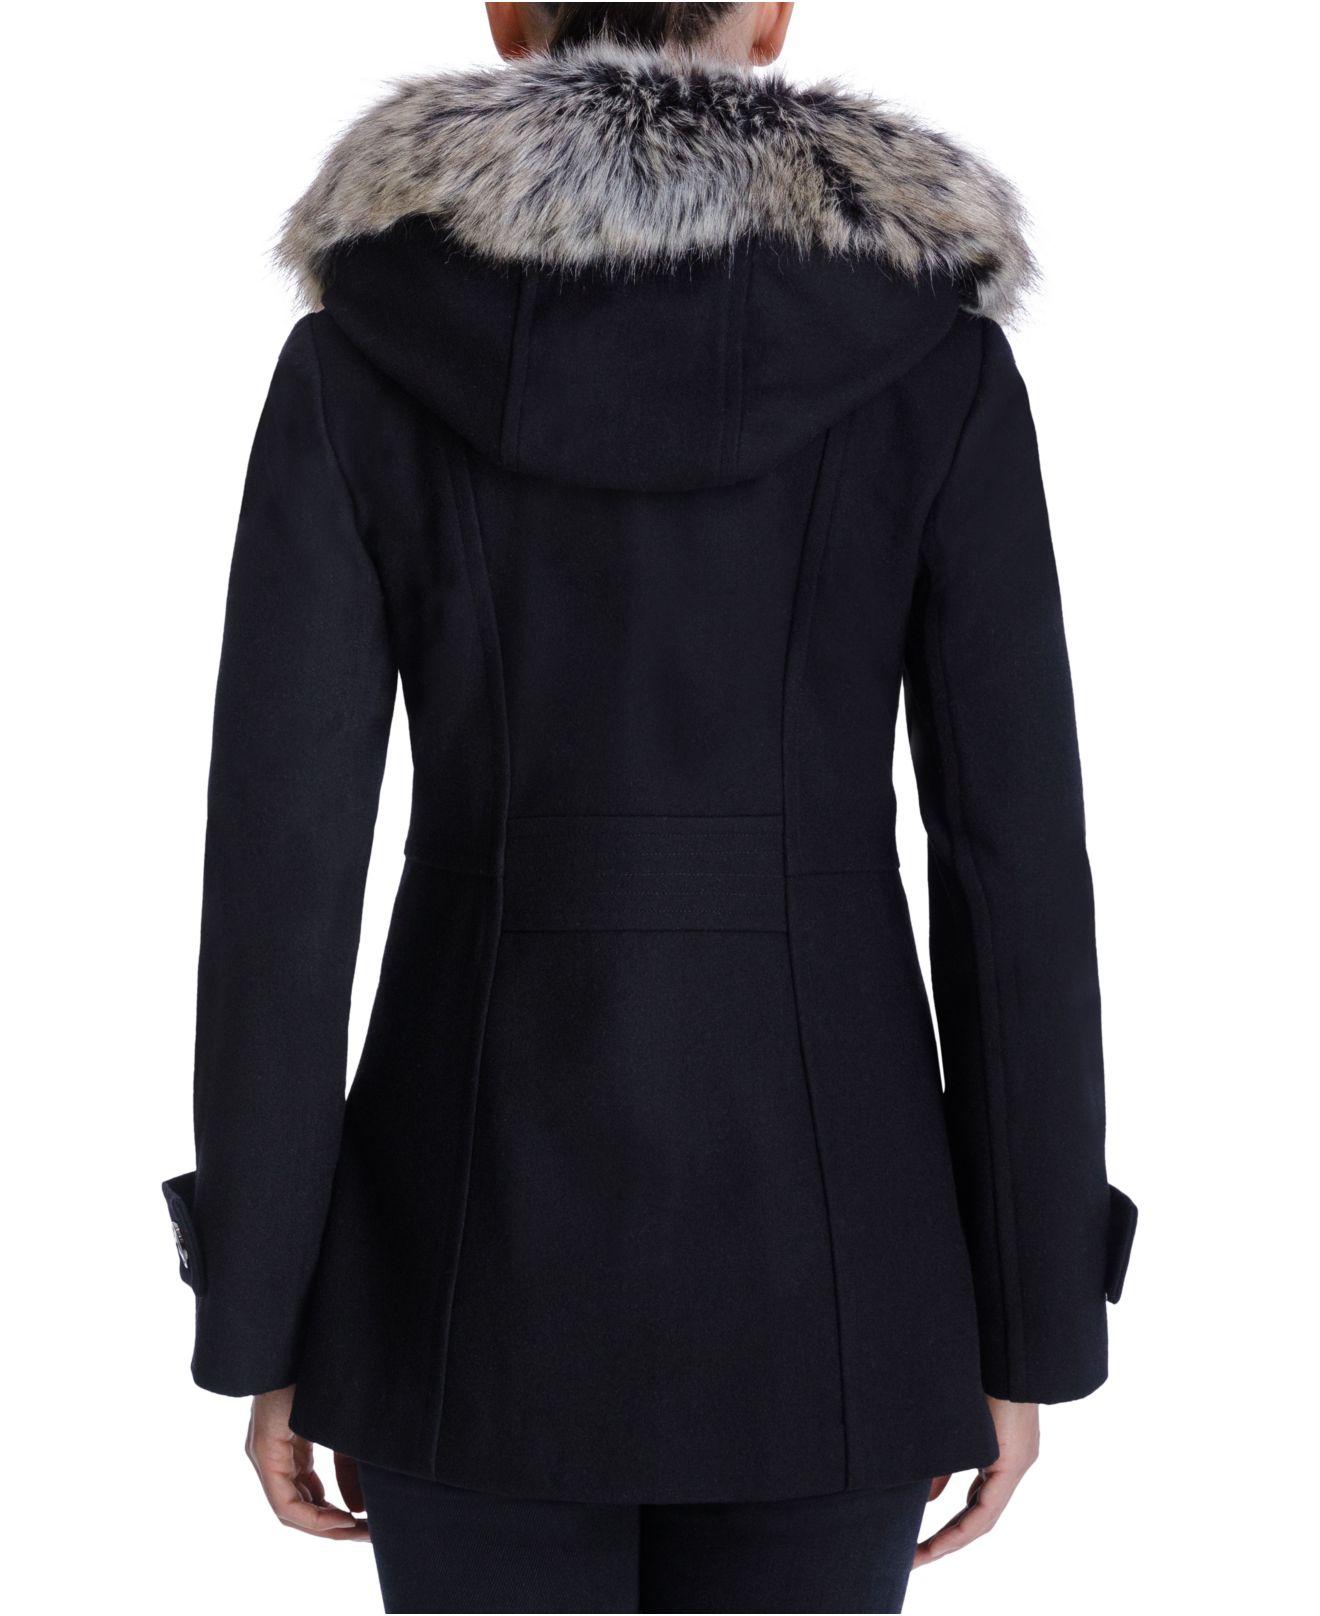 London Fog Faux-fur-trim Hooded Coat in Black - Lyst